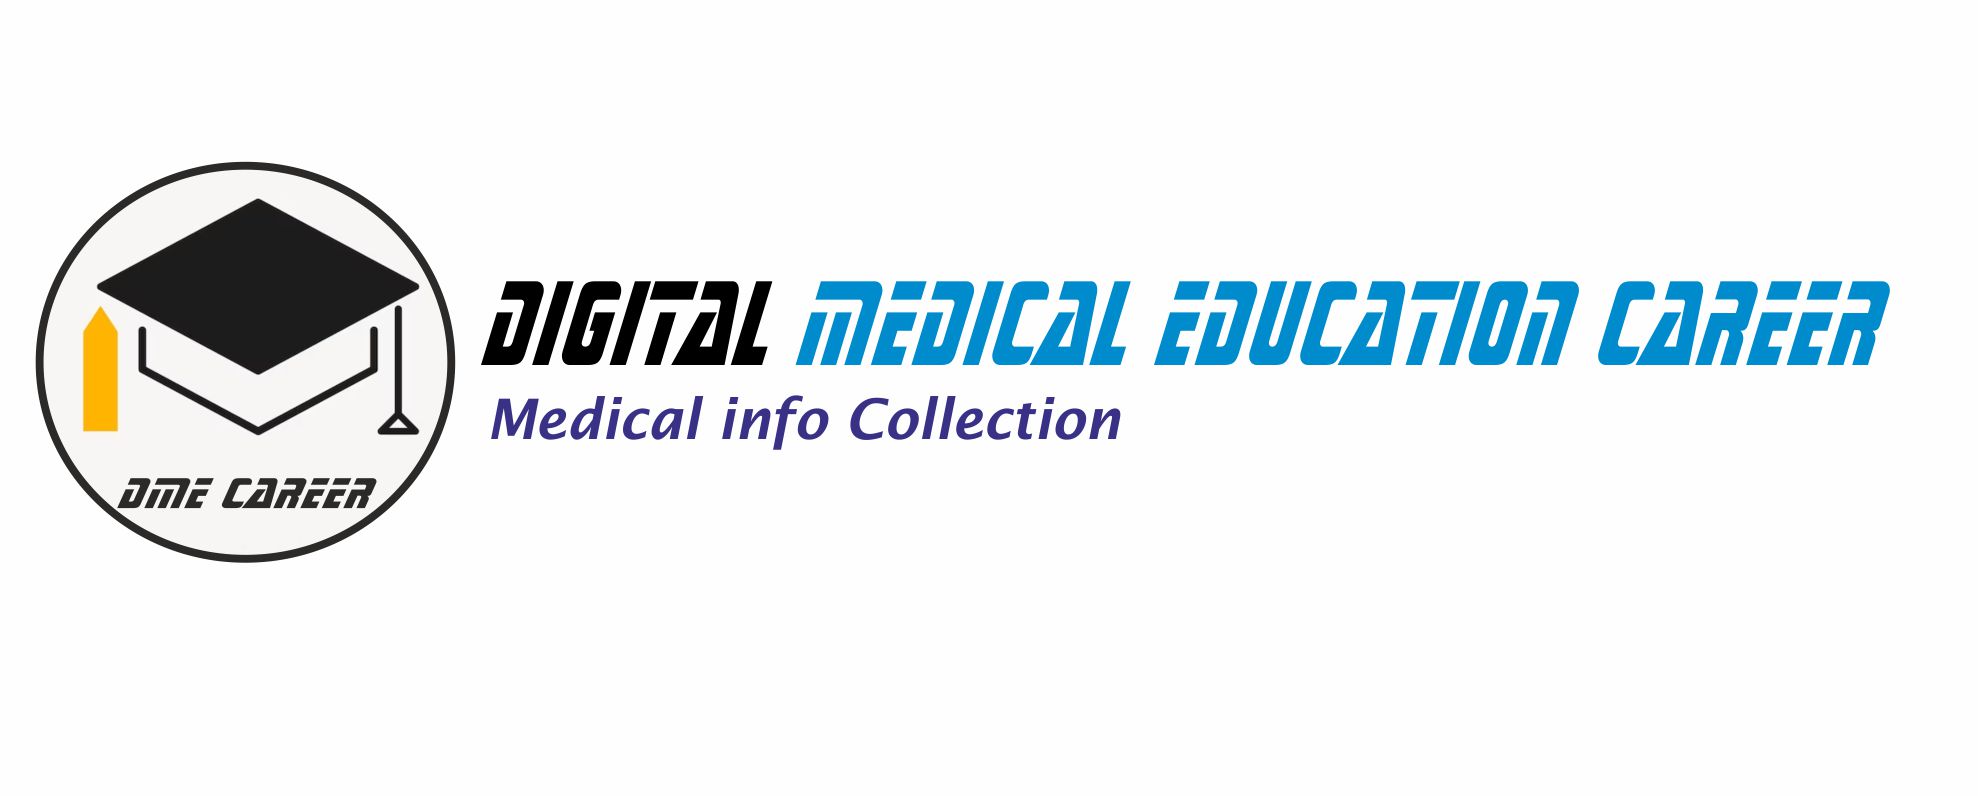 Digital Medical Education Career